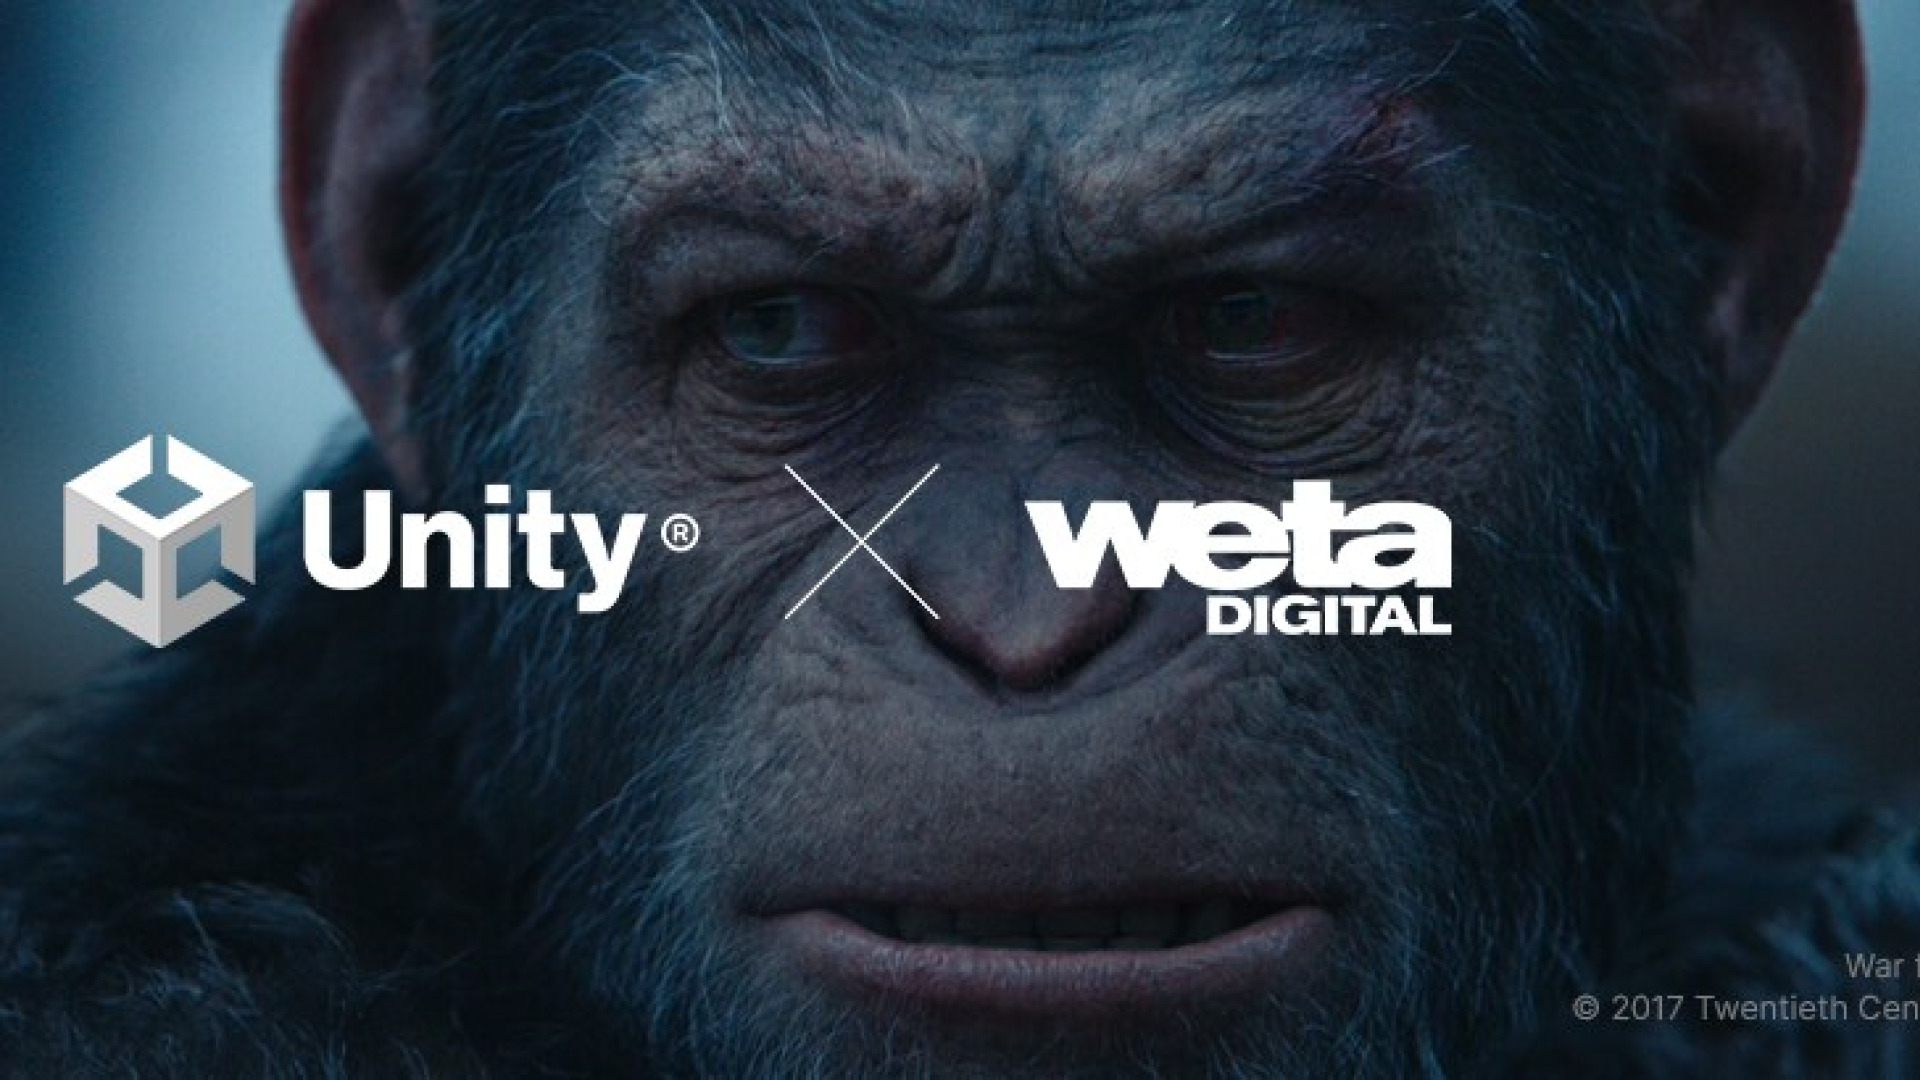 Unity เข้าซื้อ Weta Digital ผู้สร้าง VFX ภาพยนตร์ The Lord of the Rings